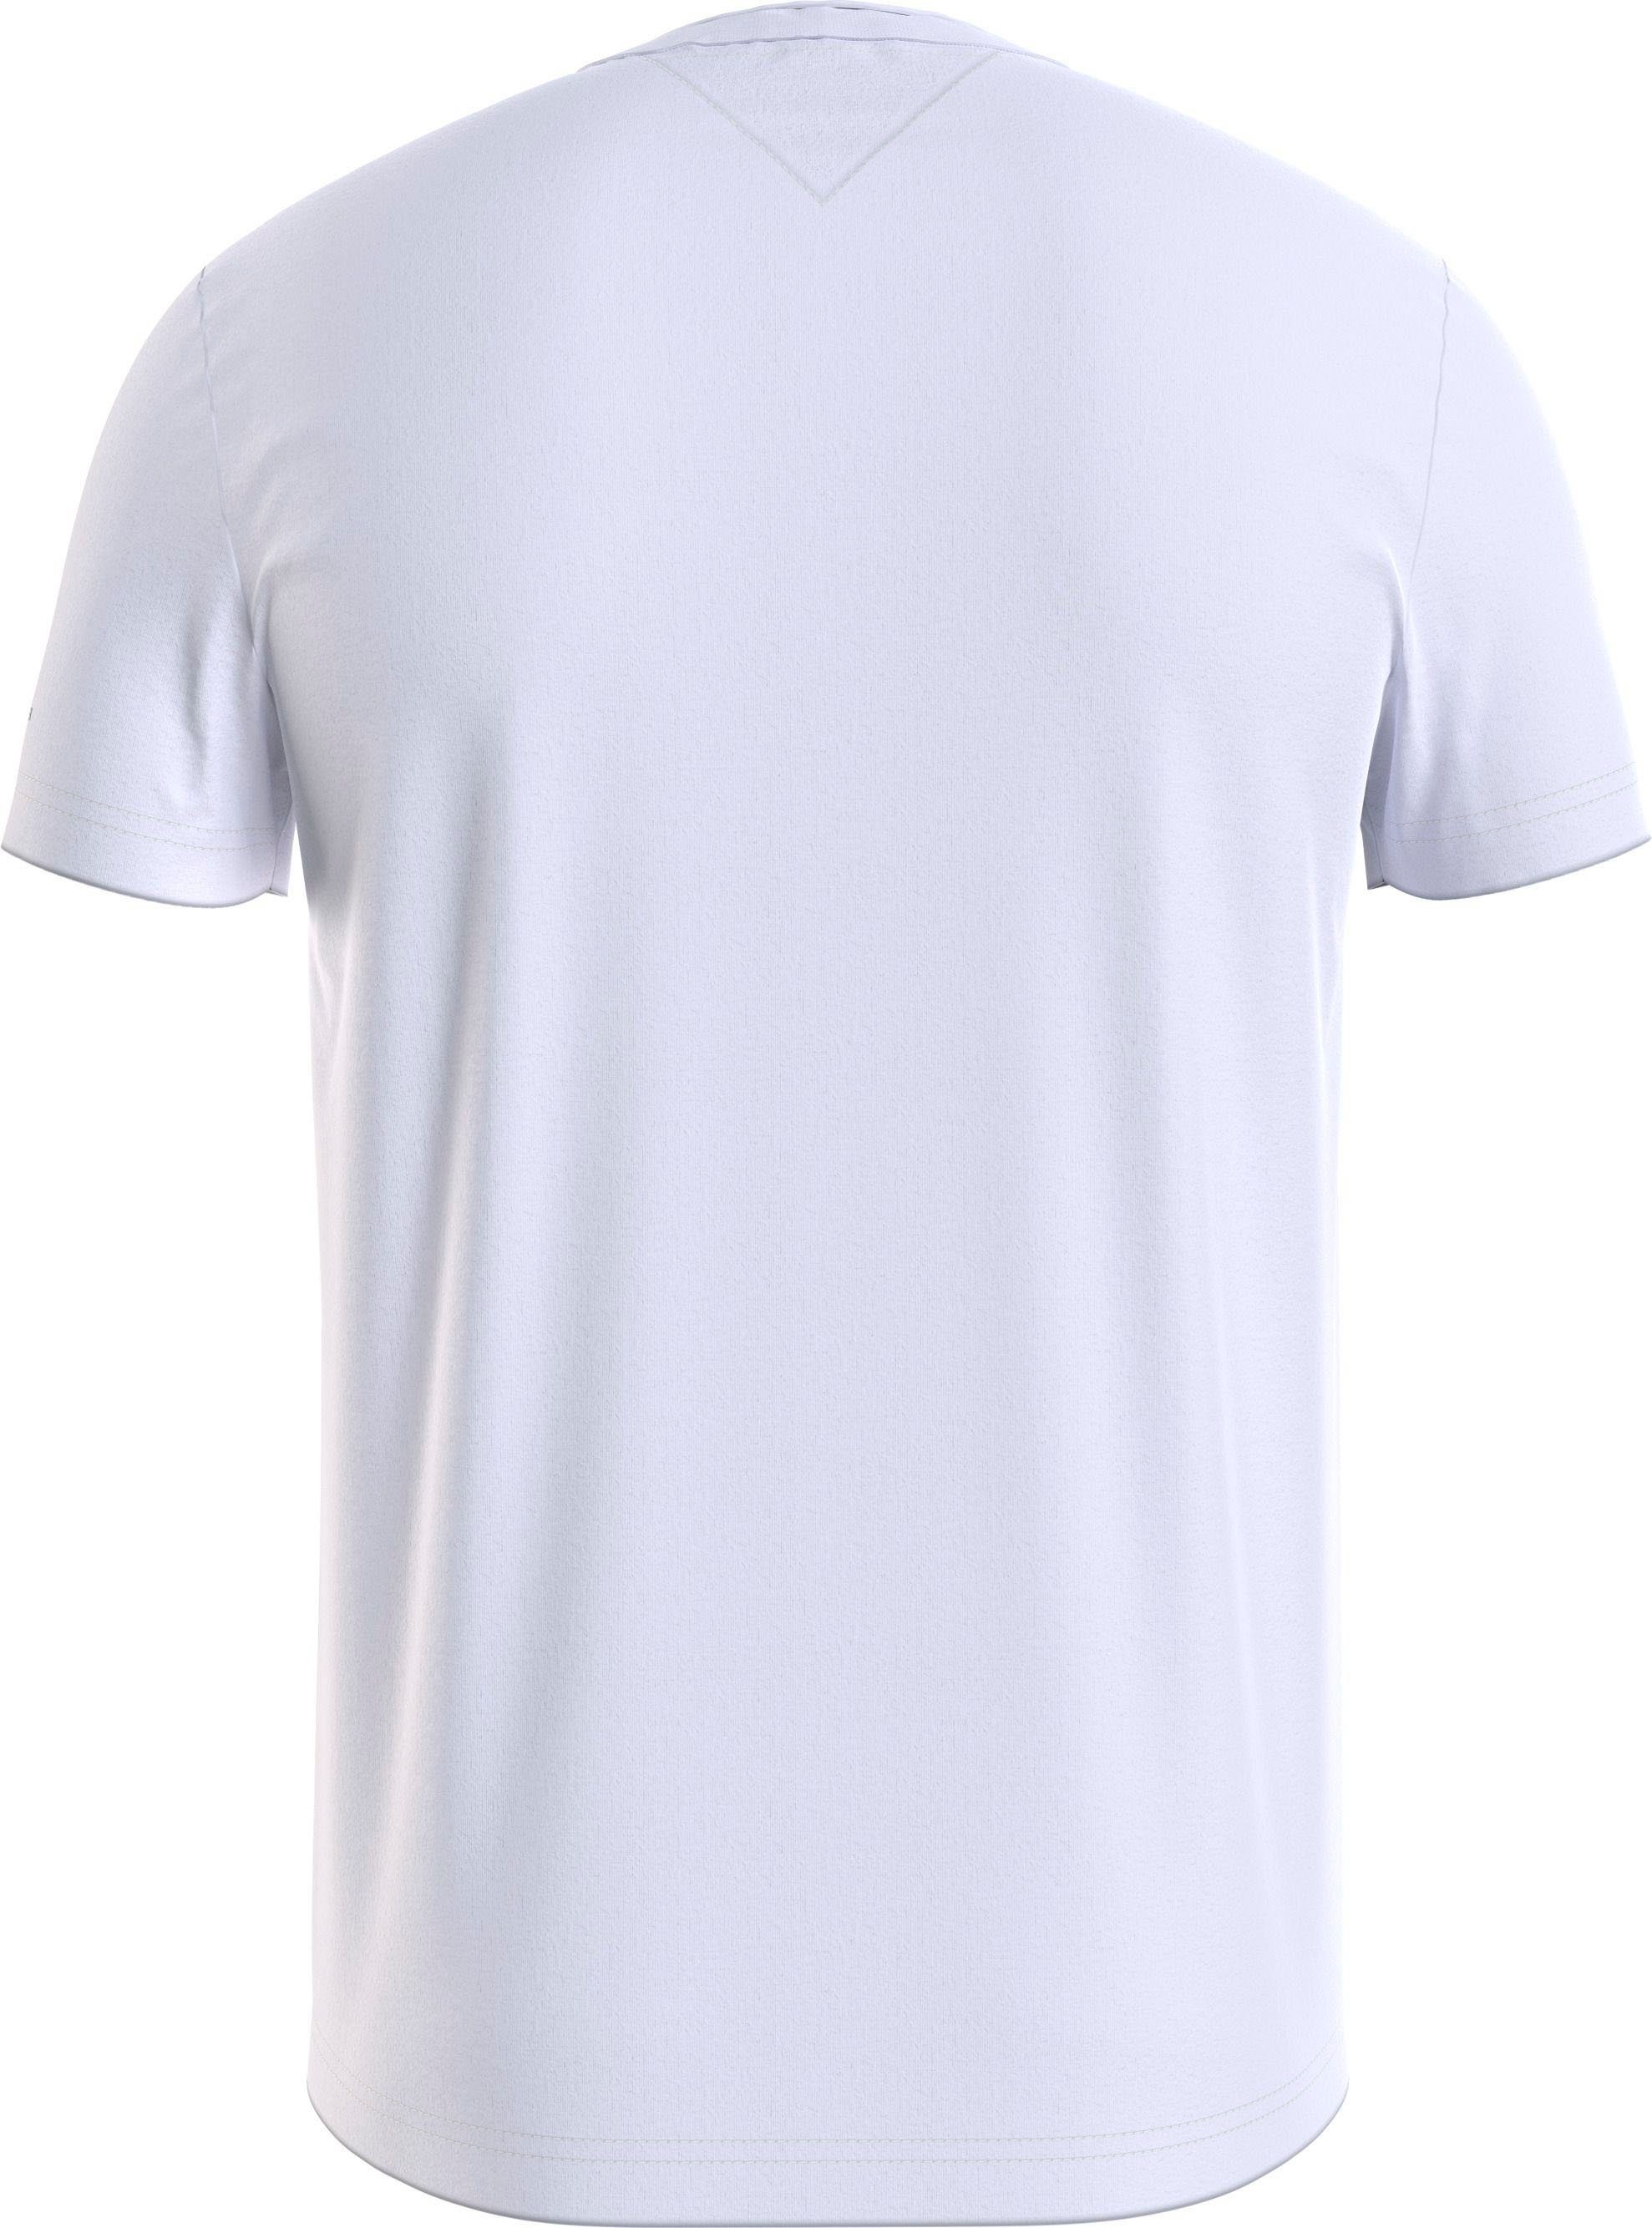 Tommy Hilfiger TOMMY SLEEVE mit T-Shirt TEE Logoschriftzug am Arm LOGO White